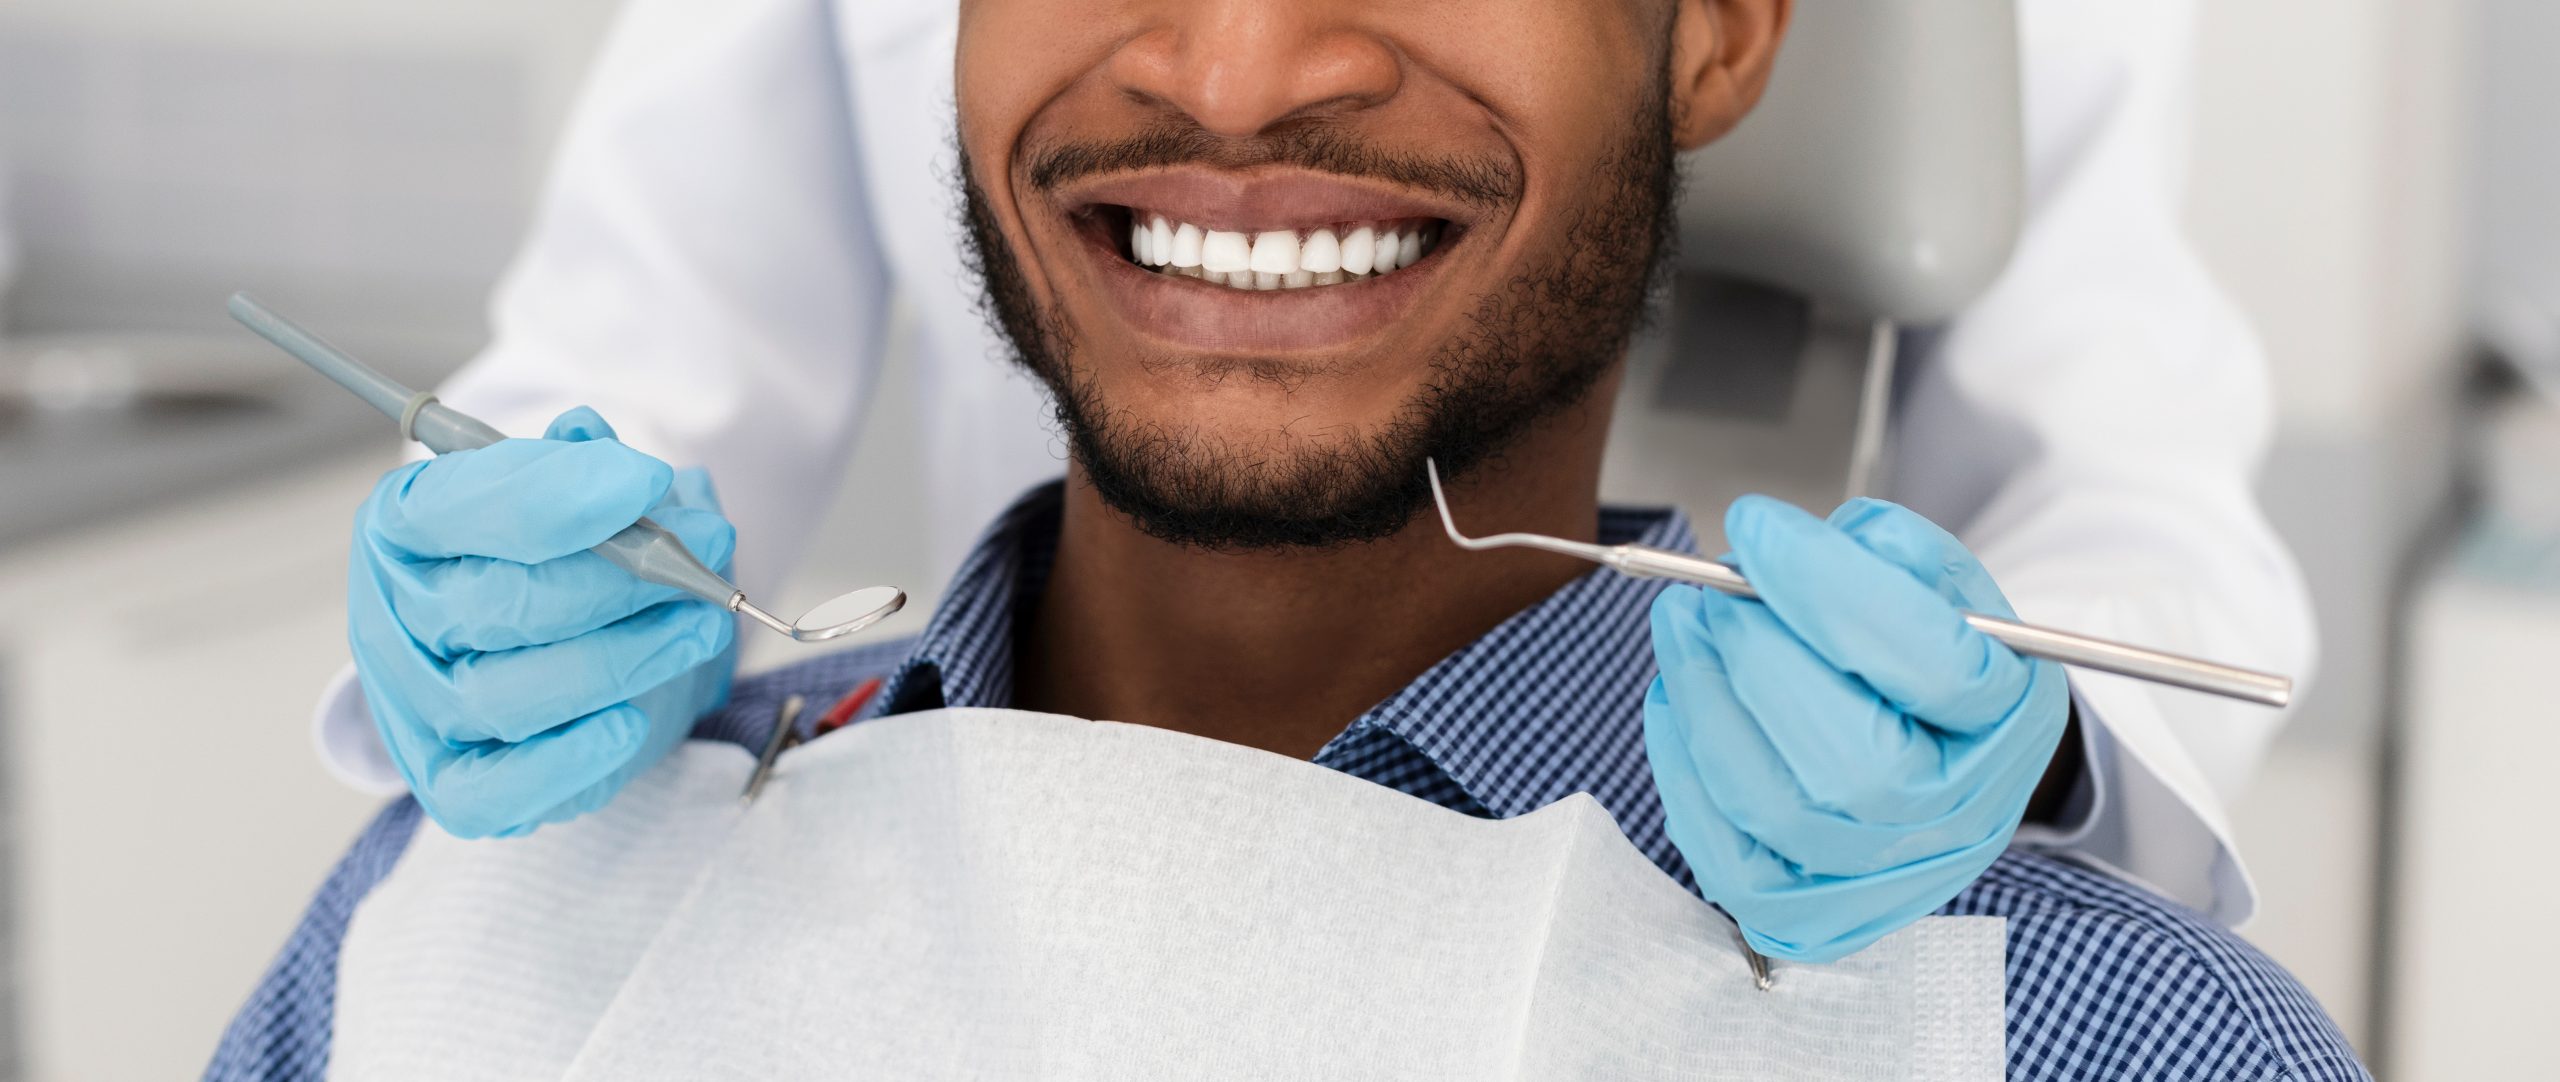 saúde bucal serviços de odontologia